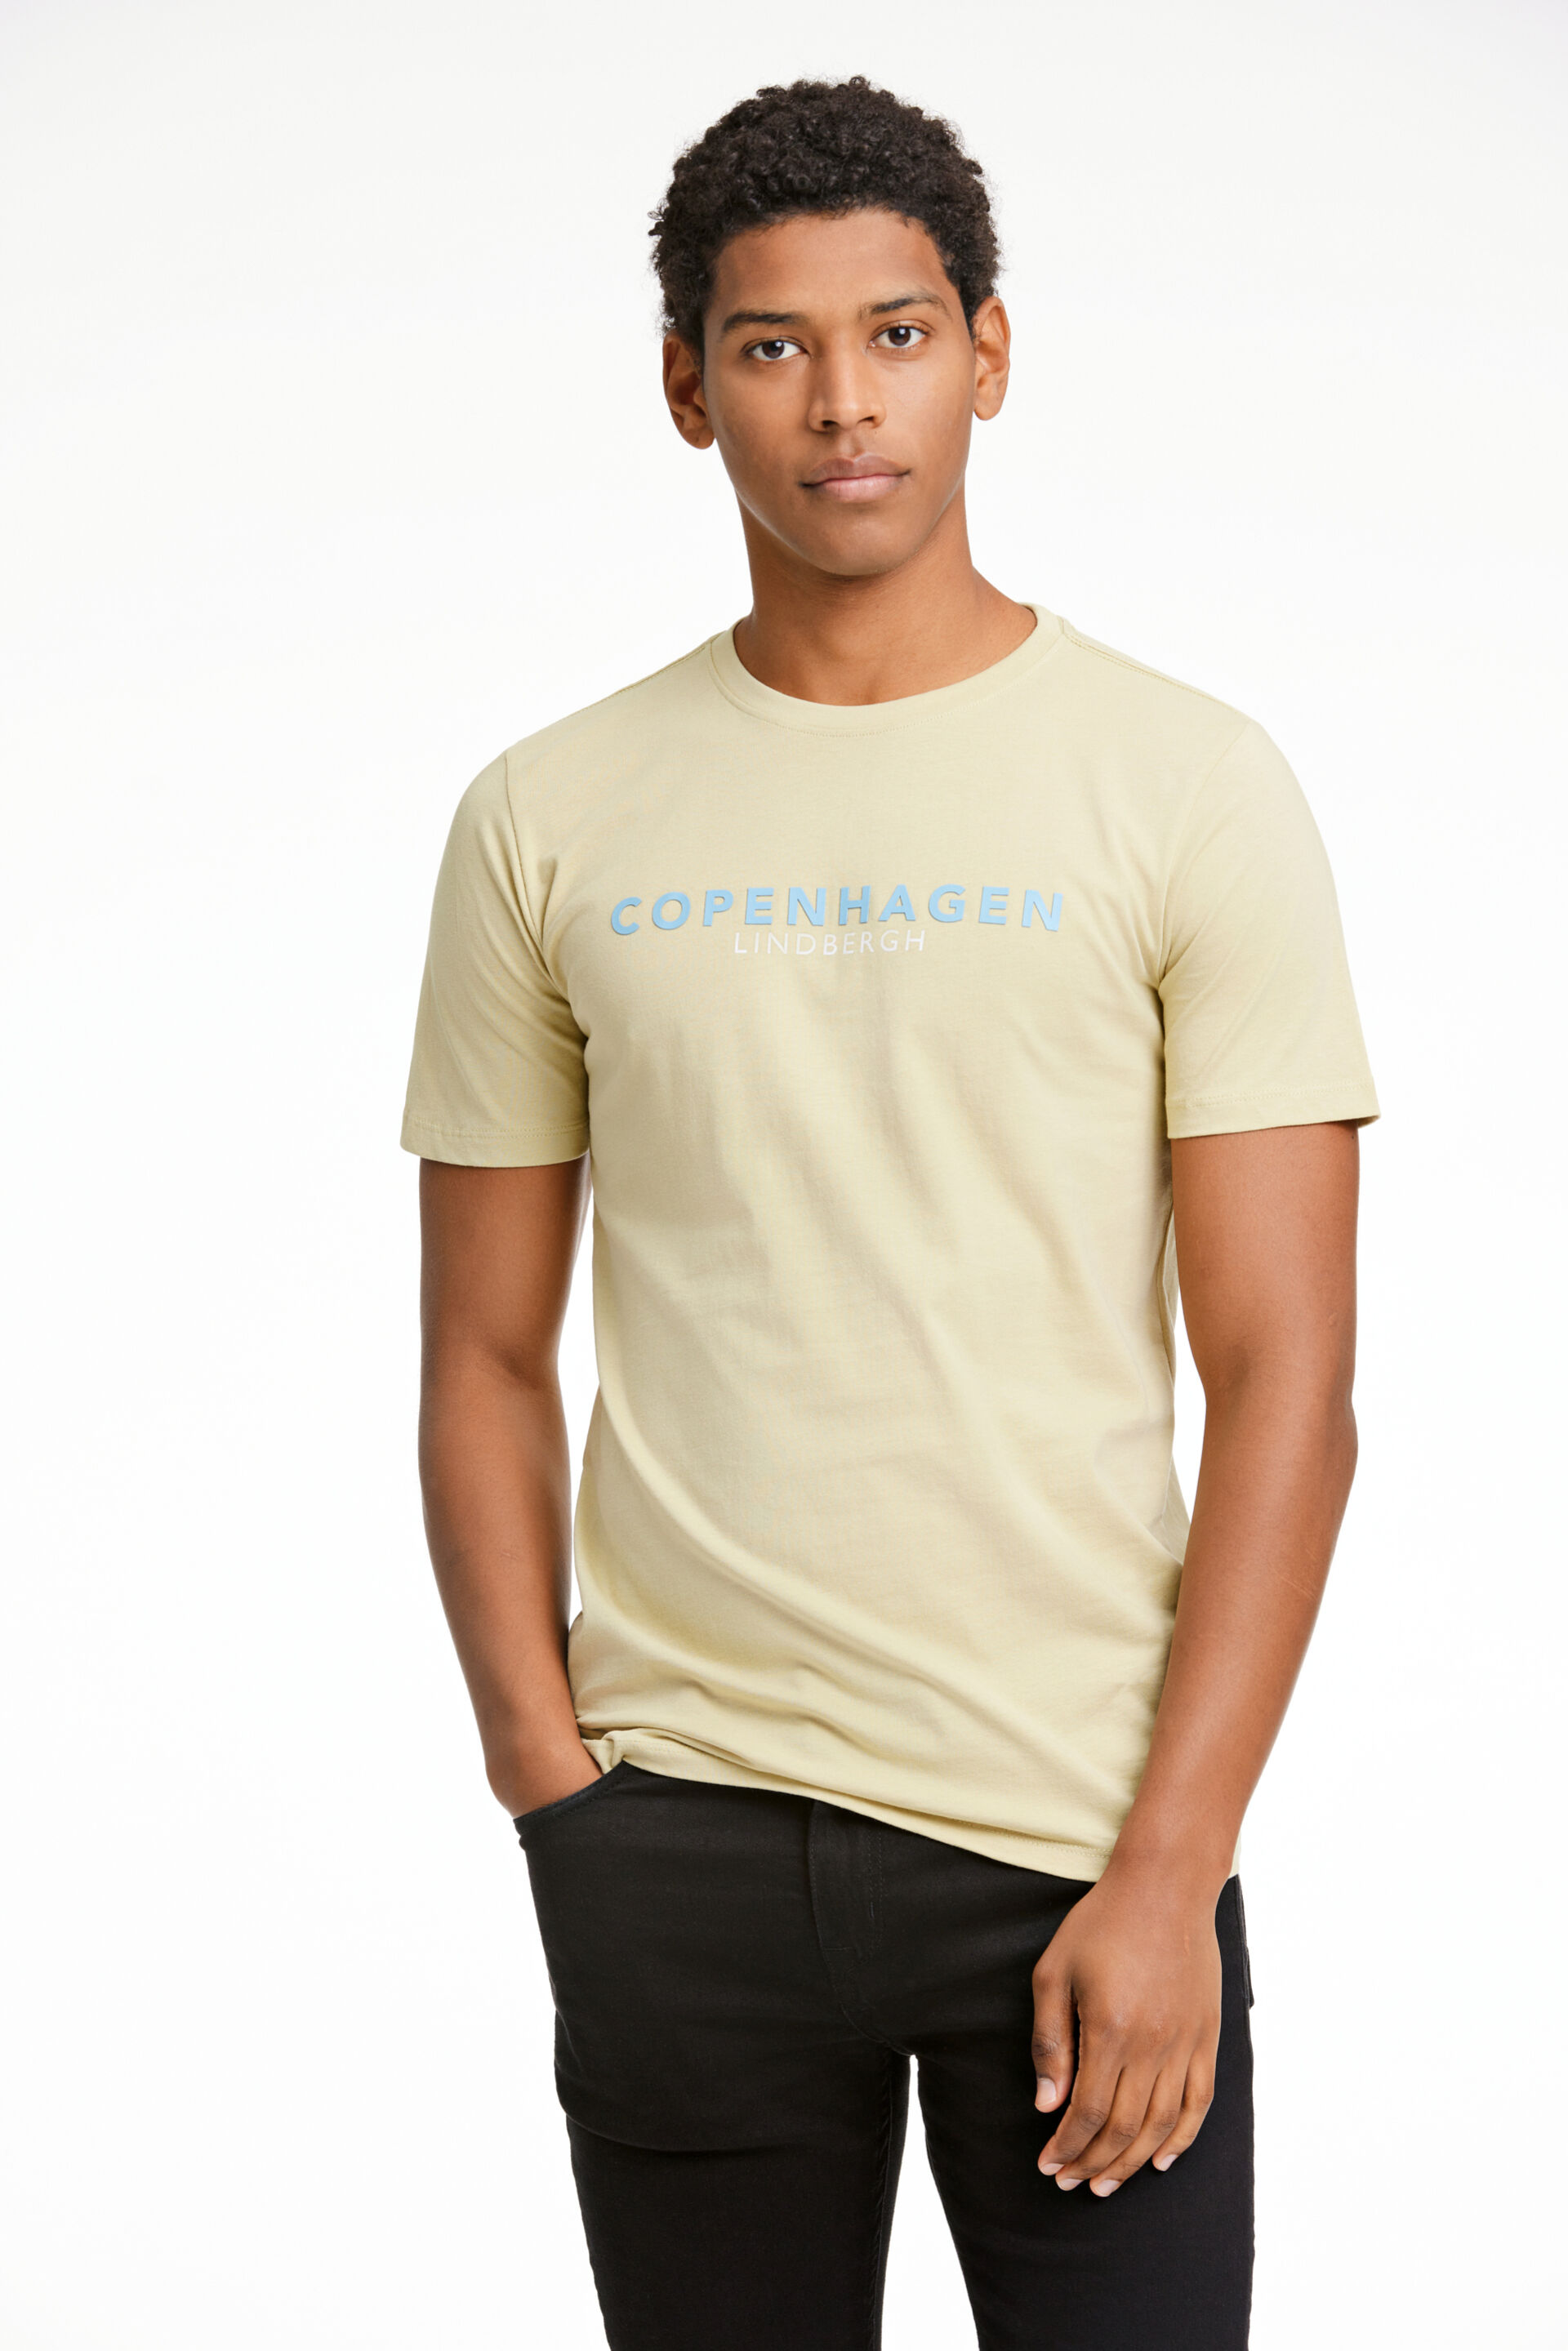 Lindbergh  T-shirt Sand 30-400200